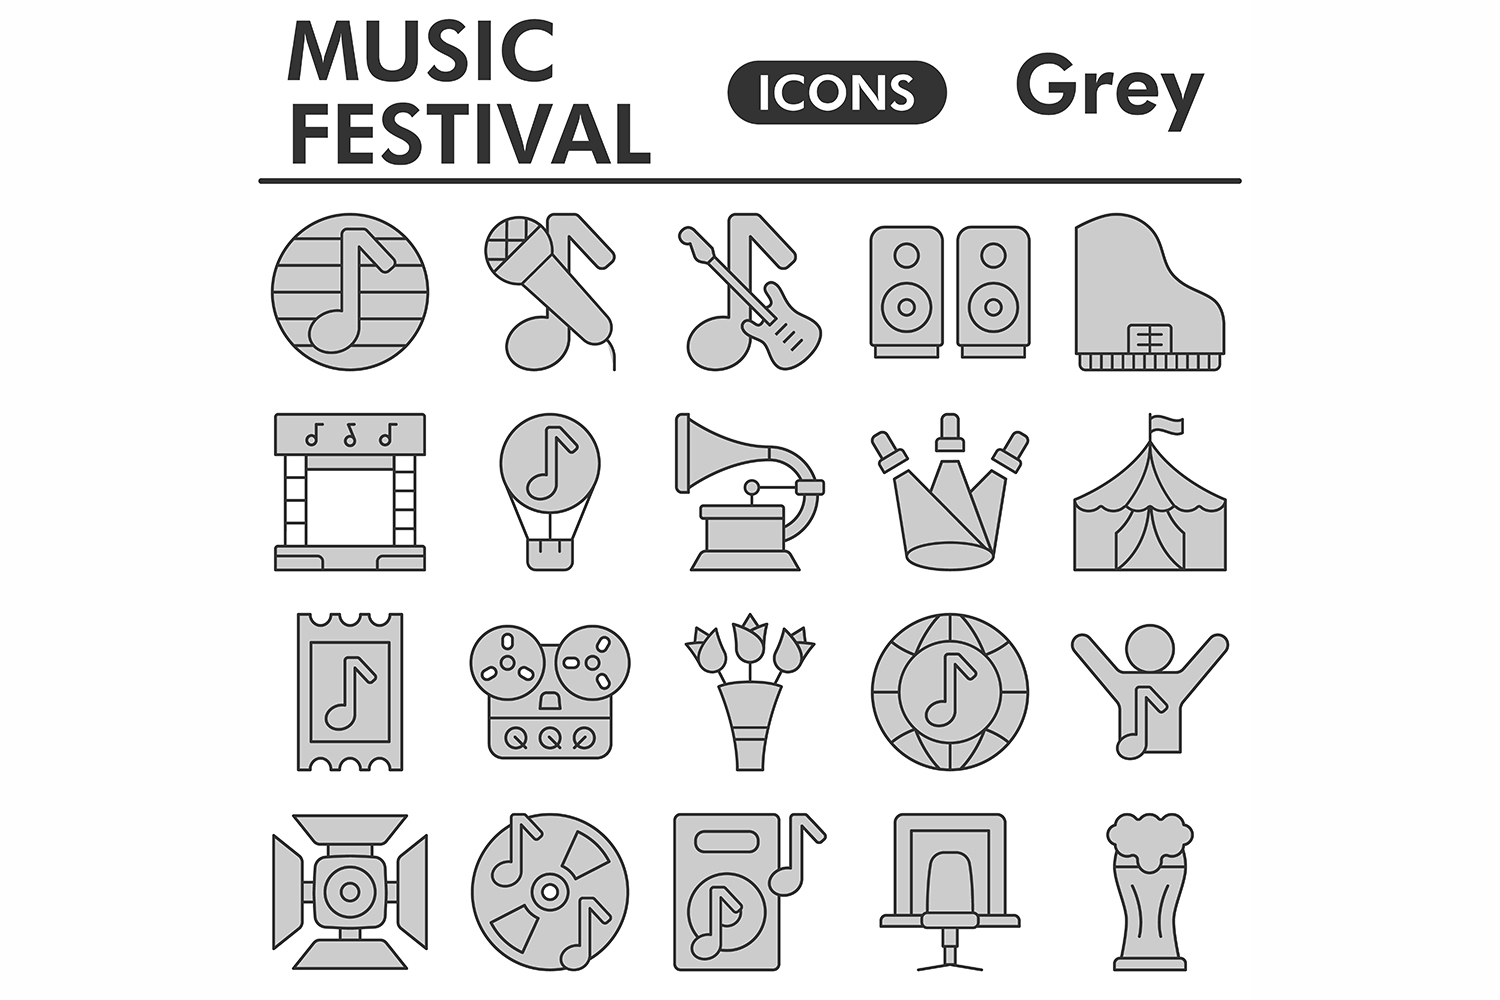 Muzic festival icons set, gray style pinterest preview image.